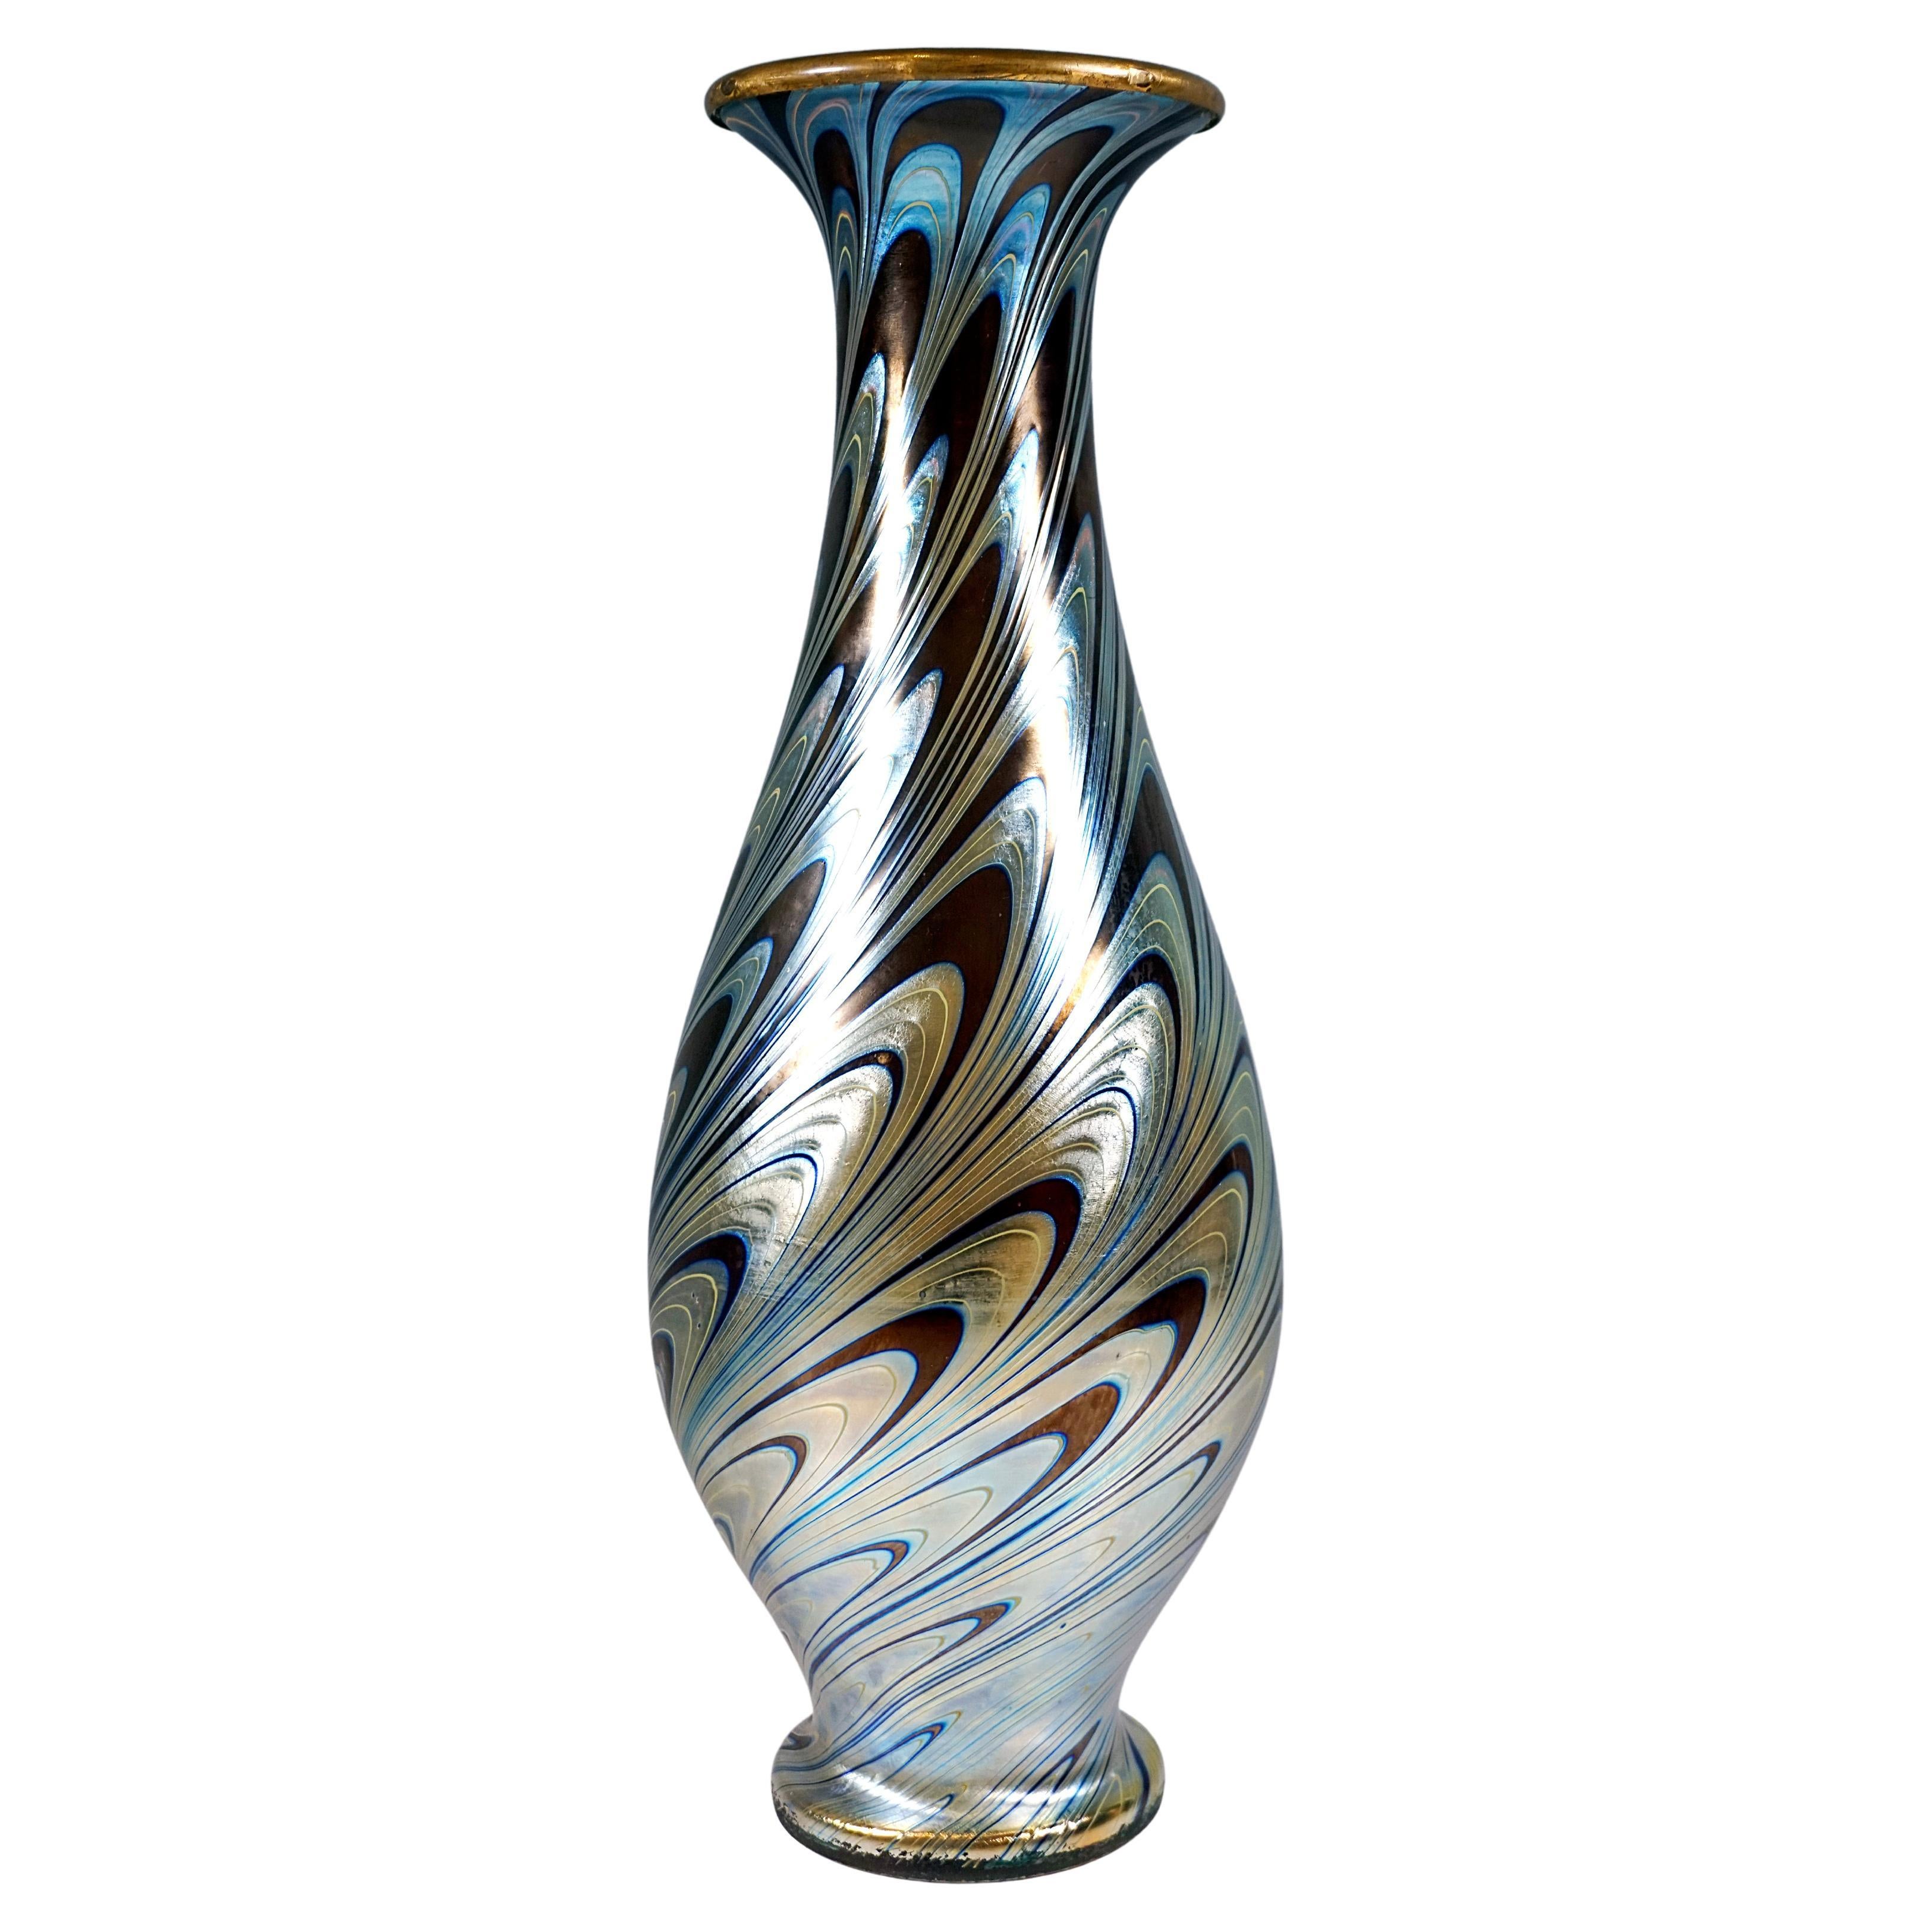 Large Loetz Art Nouveau Vase, Ruby Phenomenon Gre 7624, Austria-Hungary, Ca 1898